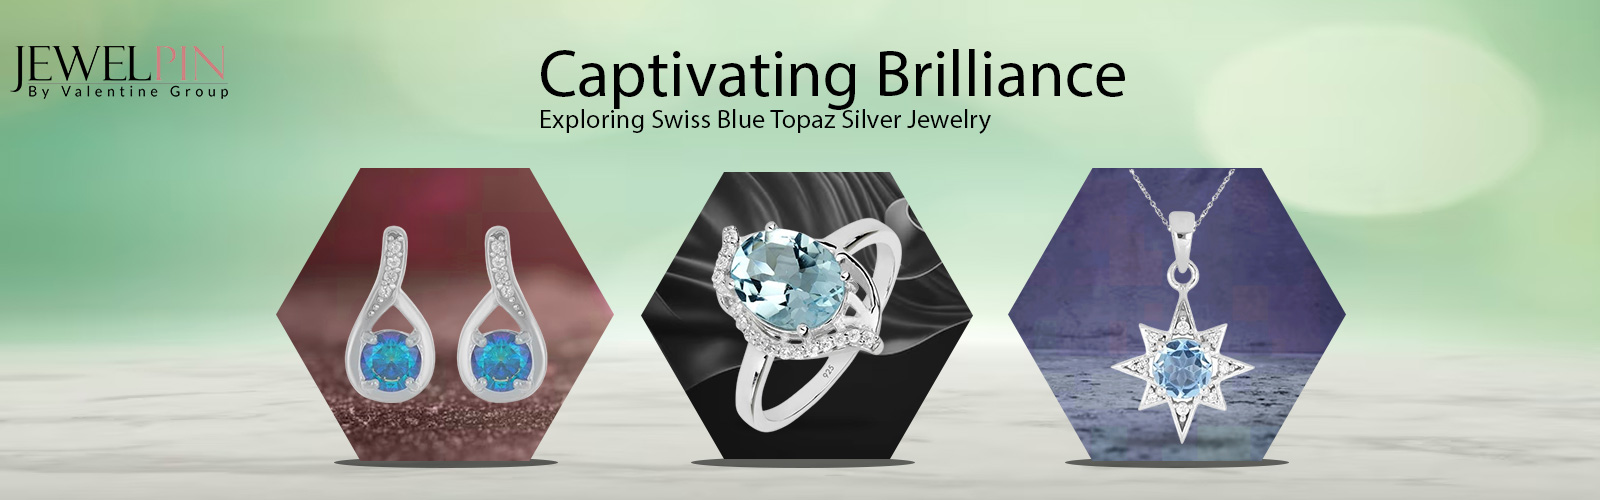 JEWELPIN - captivating brilliance exploring swiss blue topaz silver jewellery